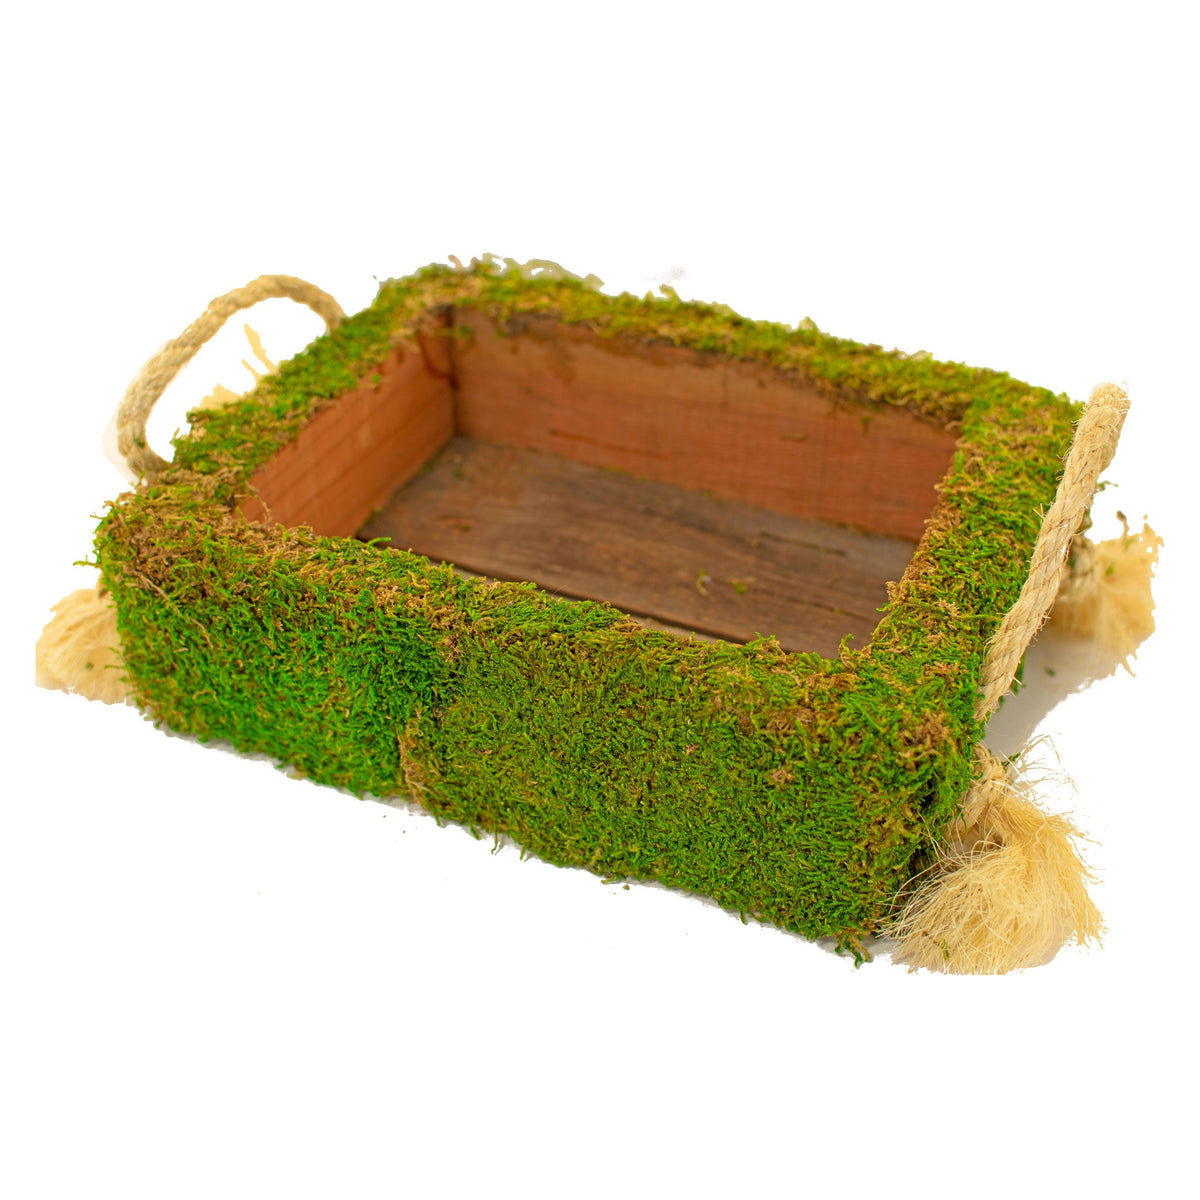 Make Your Own Succulent Planter Box